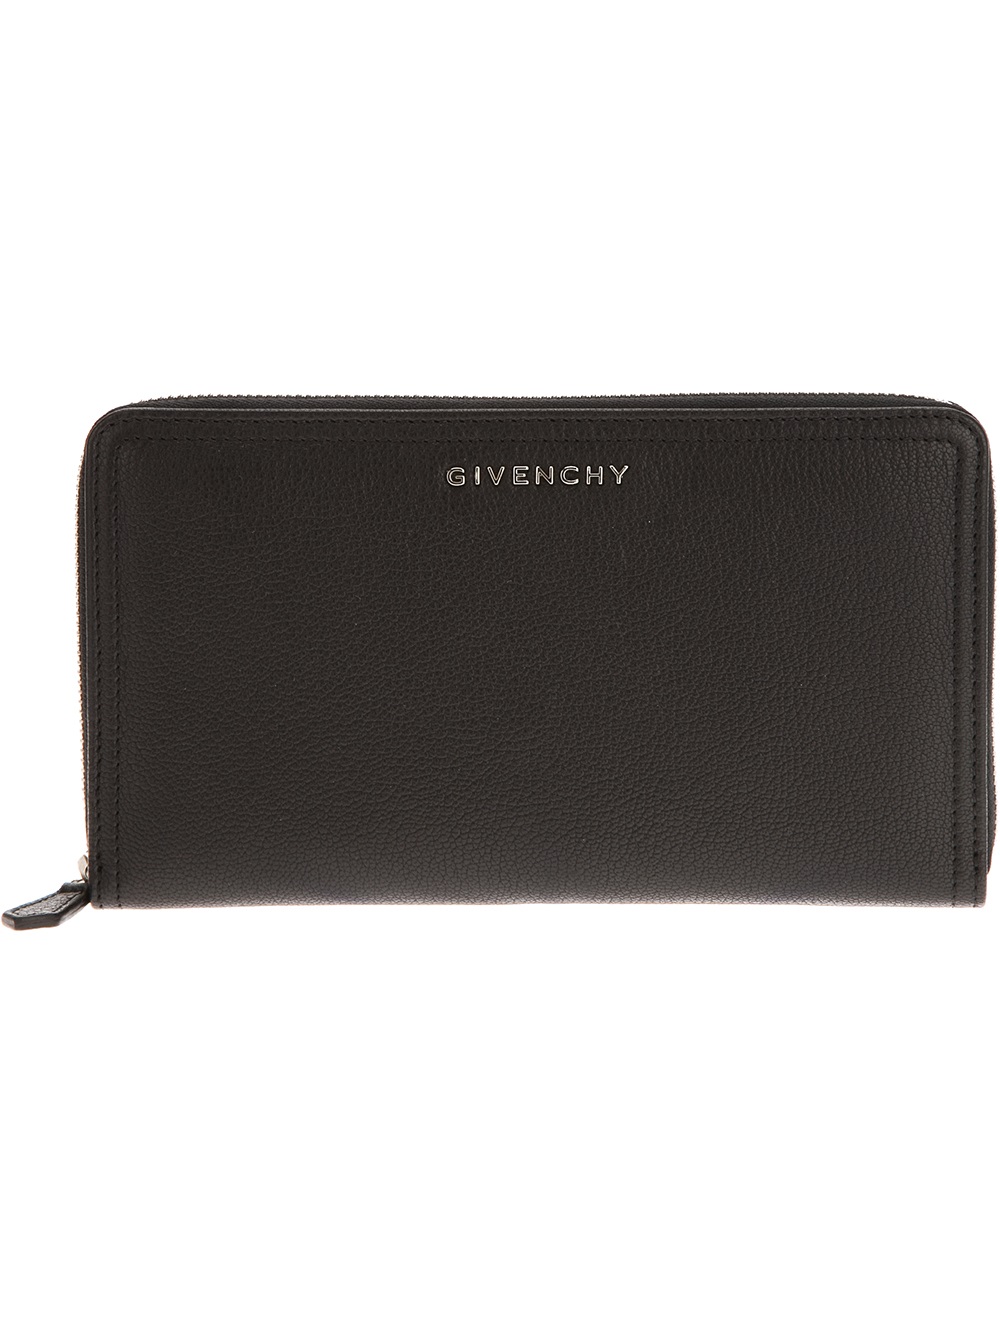 Givenchy Zip Around Wallet in Black | Lyst